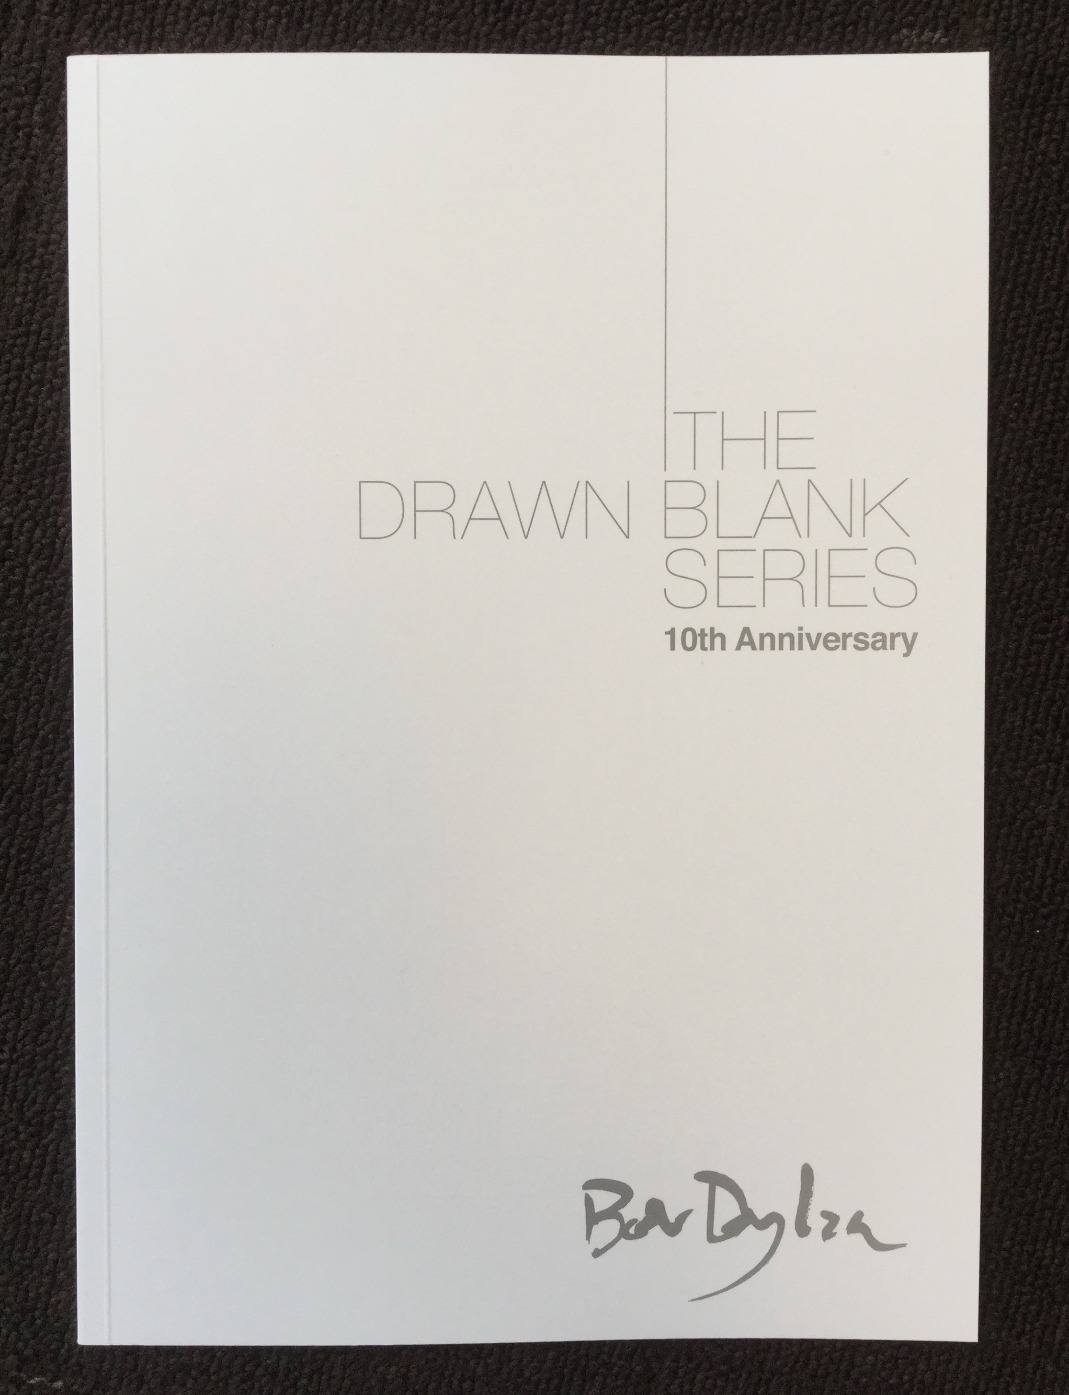 2018 Drawn Blank Series Brochure (10th Anniversary) by Bob Dylan